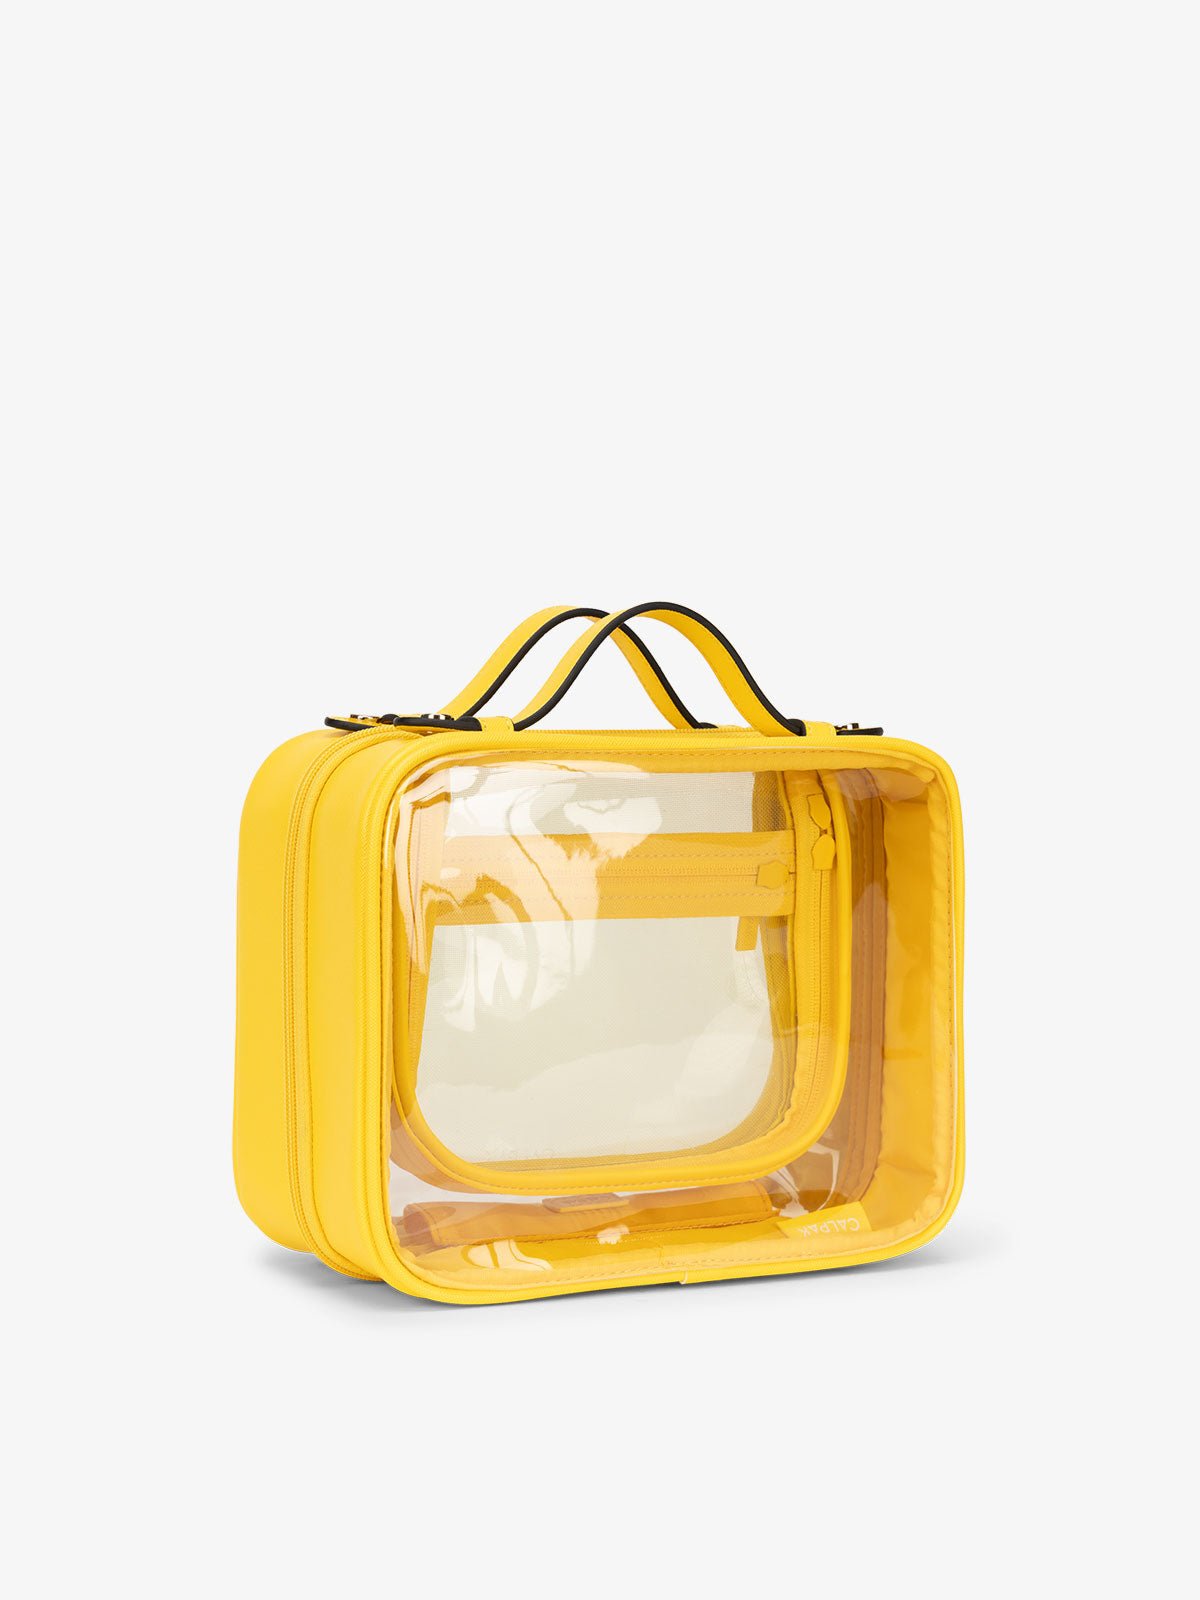 CALPAK clear makeup bag with top handles in yellow